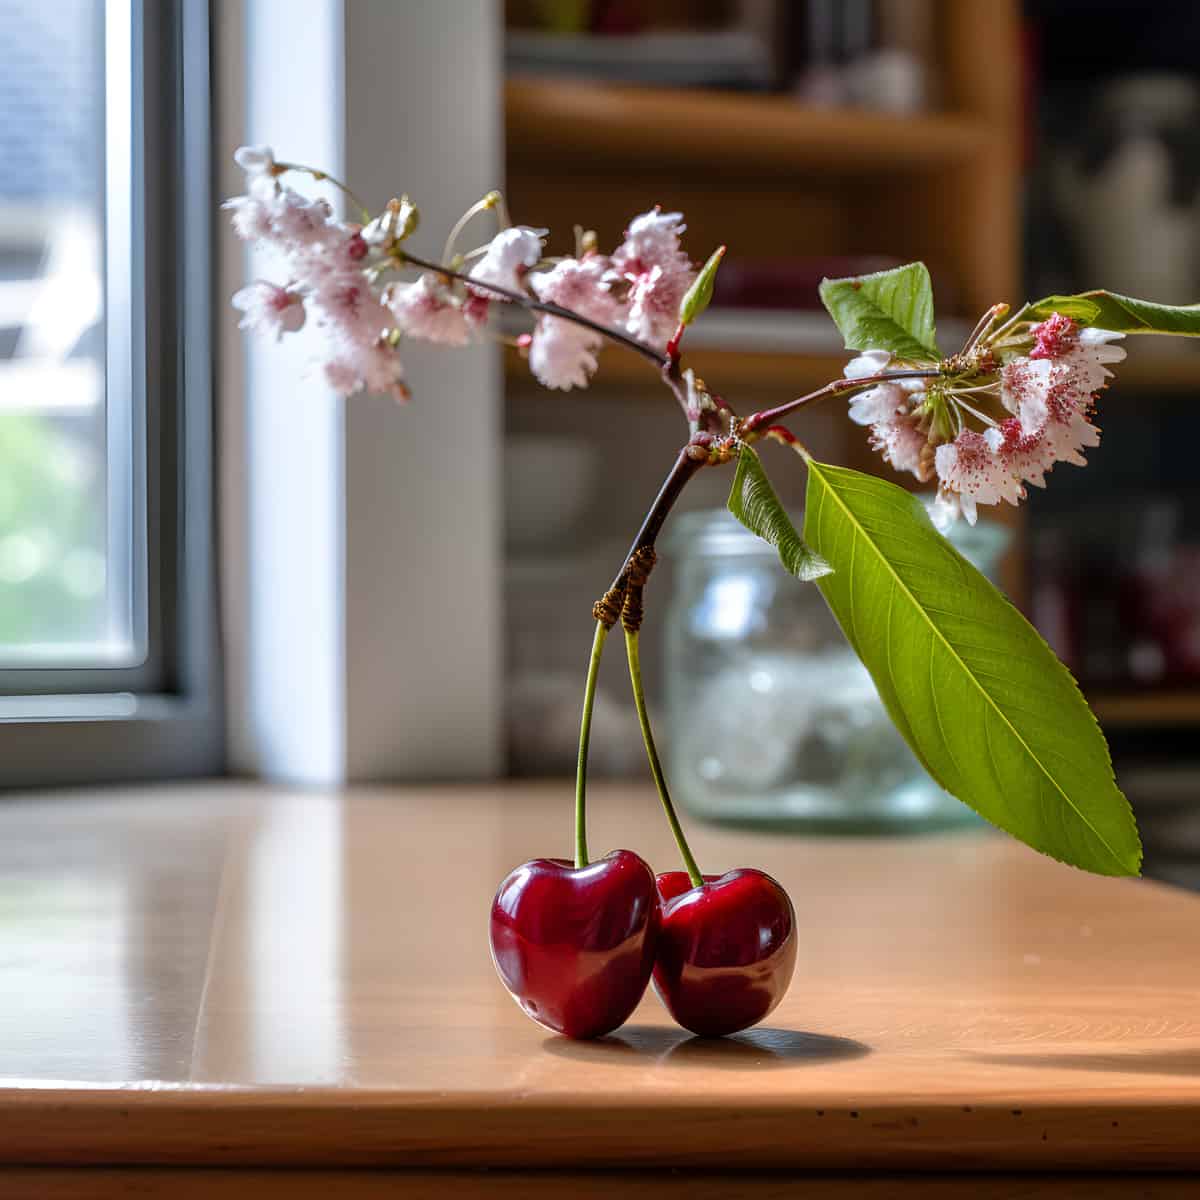 Grayleaf Cherries on a kitchen counter